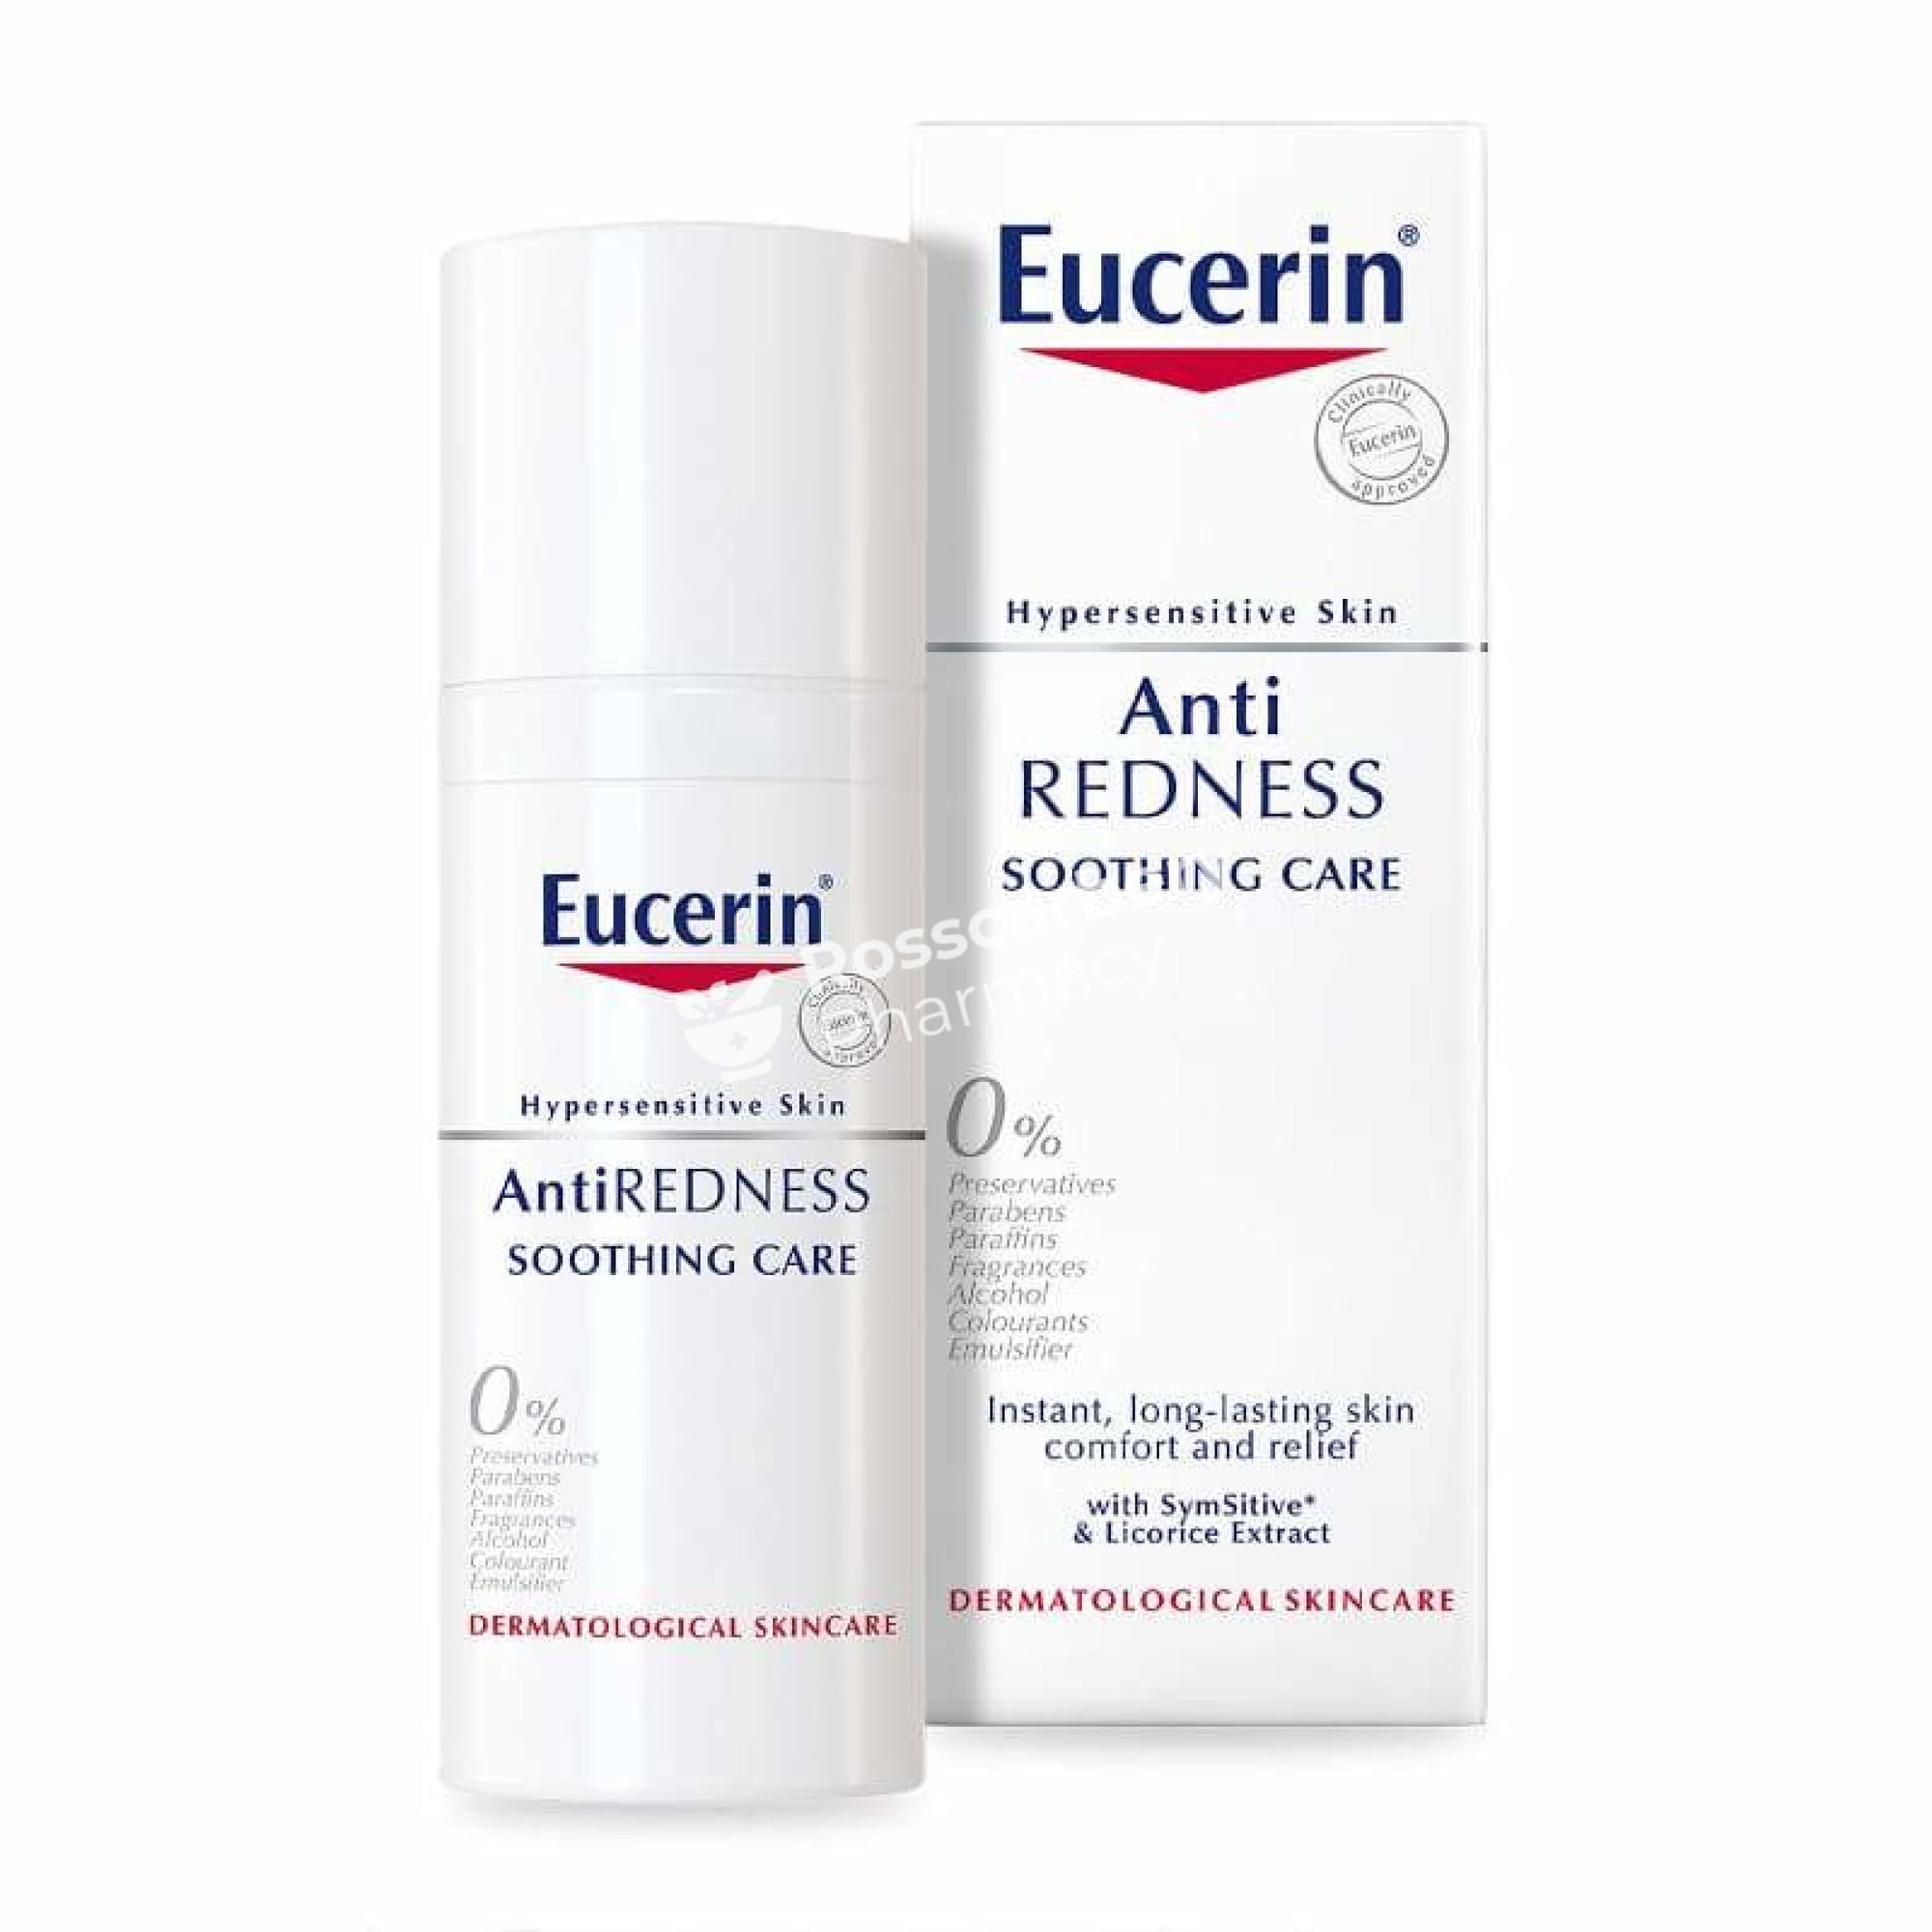 Eucerin Hypersensitive Skin Anti-Redness Soothing Care Facial Moisturiser